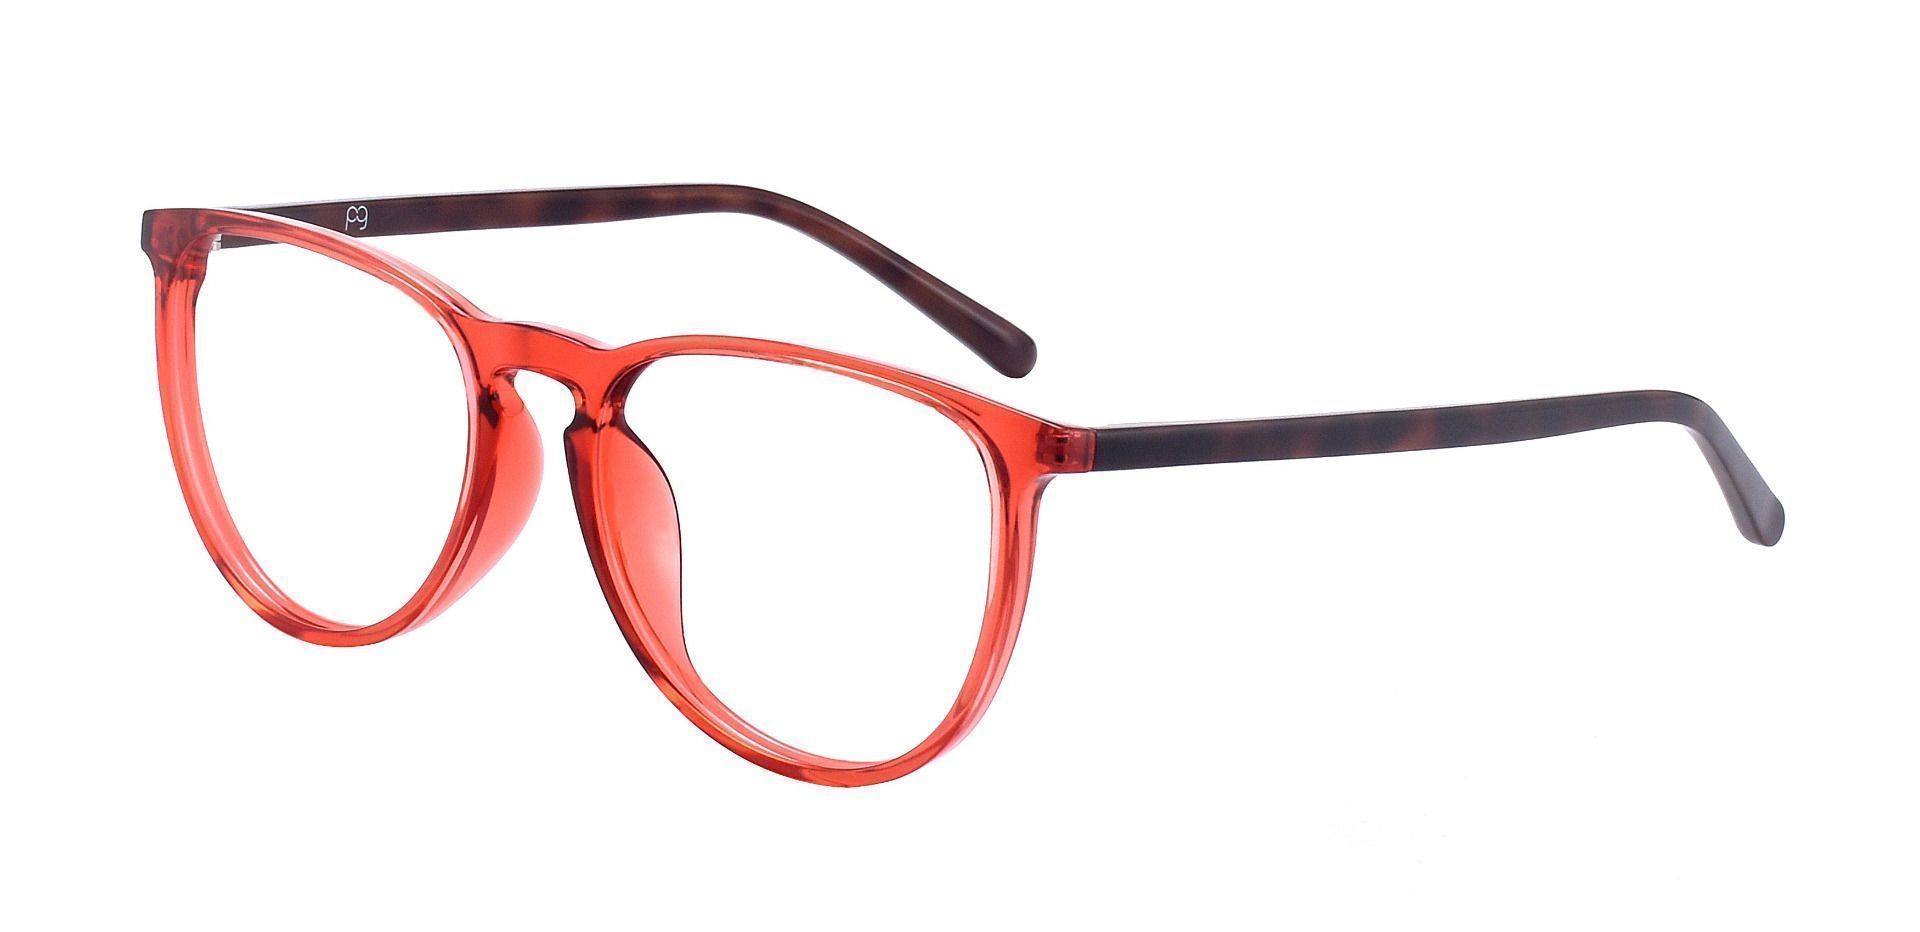 Rader Oval Prescription Glasses - Red